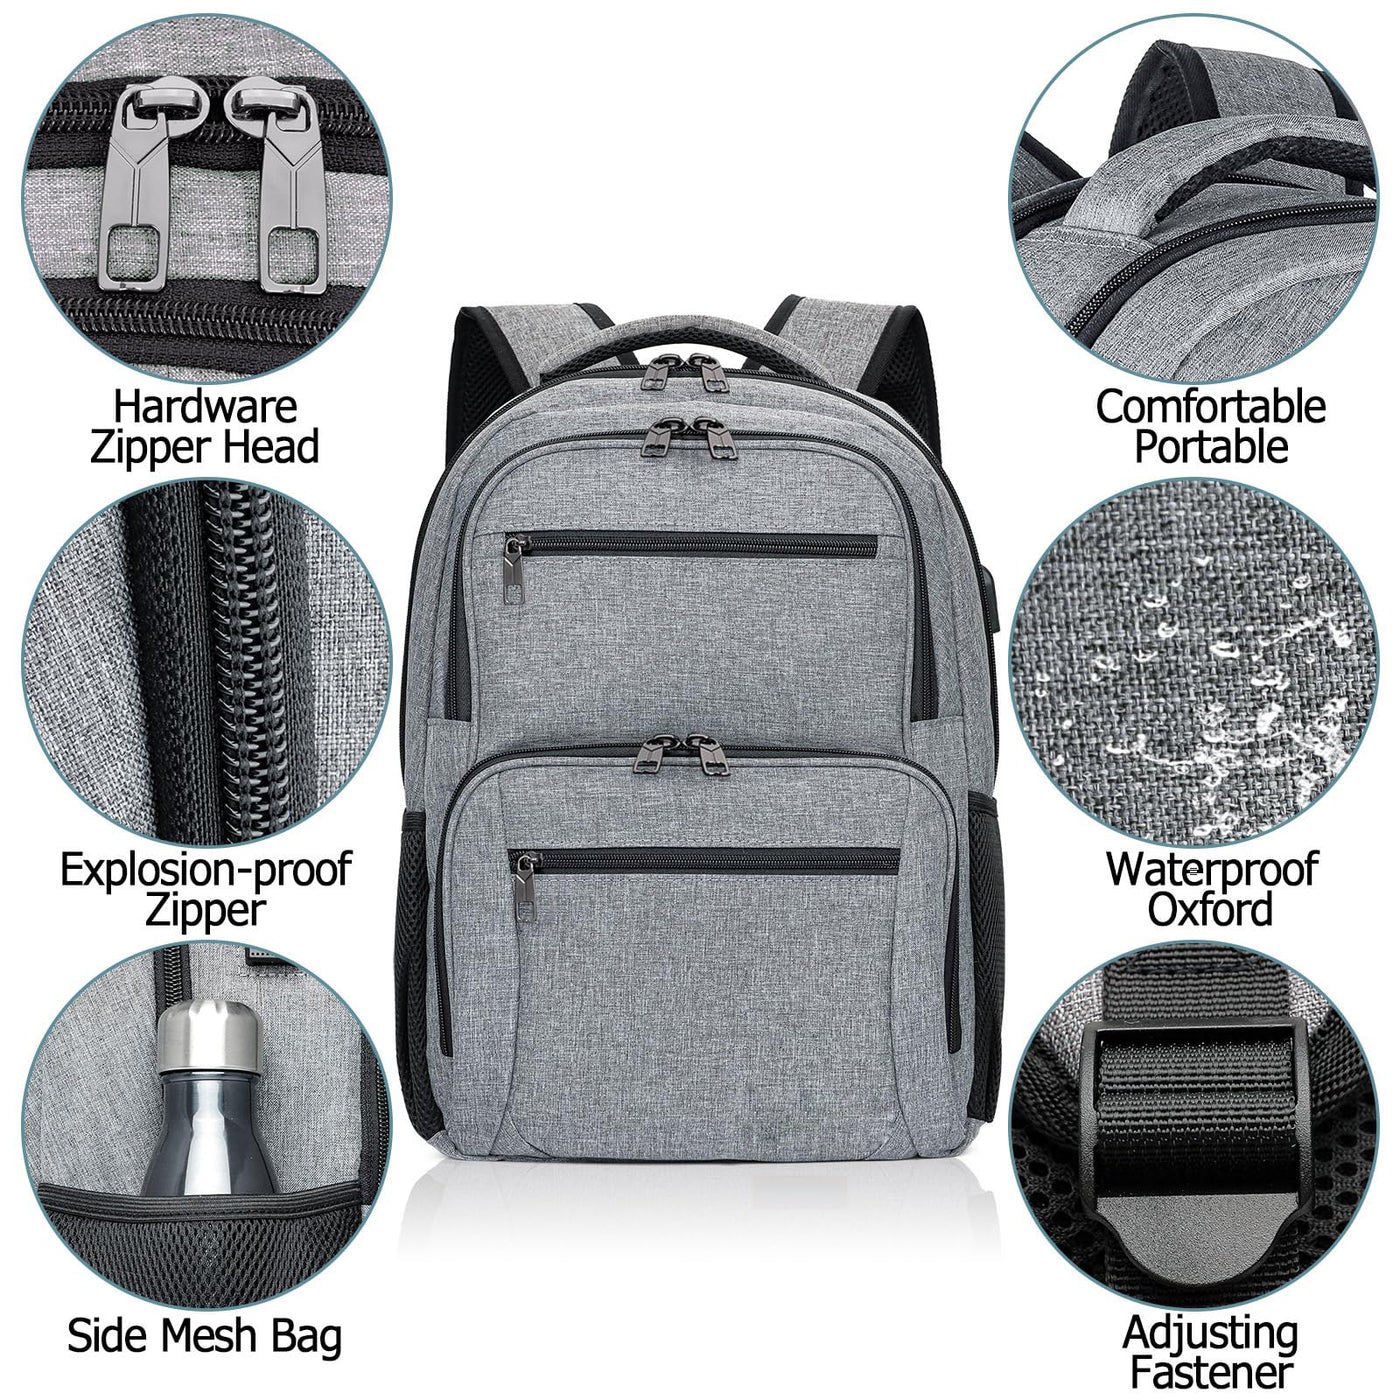 Backpack, School Backpack Waterproof Work Laptop with USB Charging Port, Travel Hiking Backpack